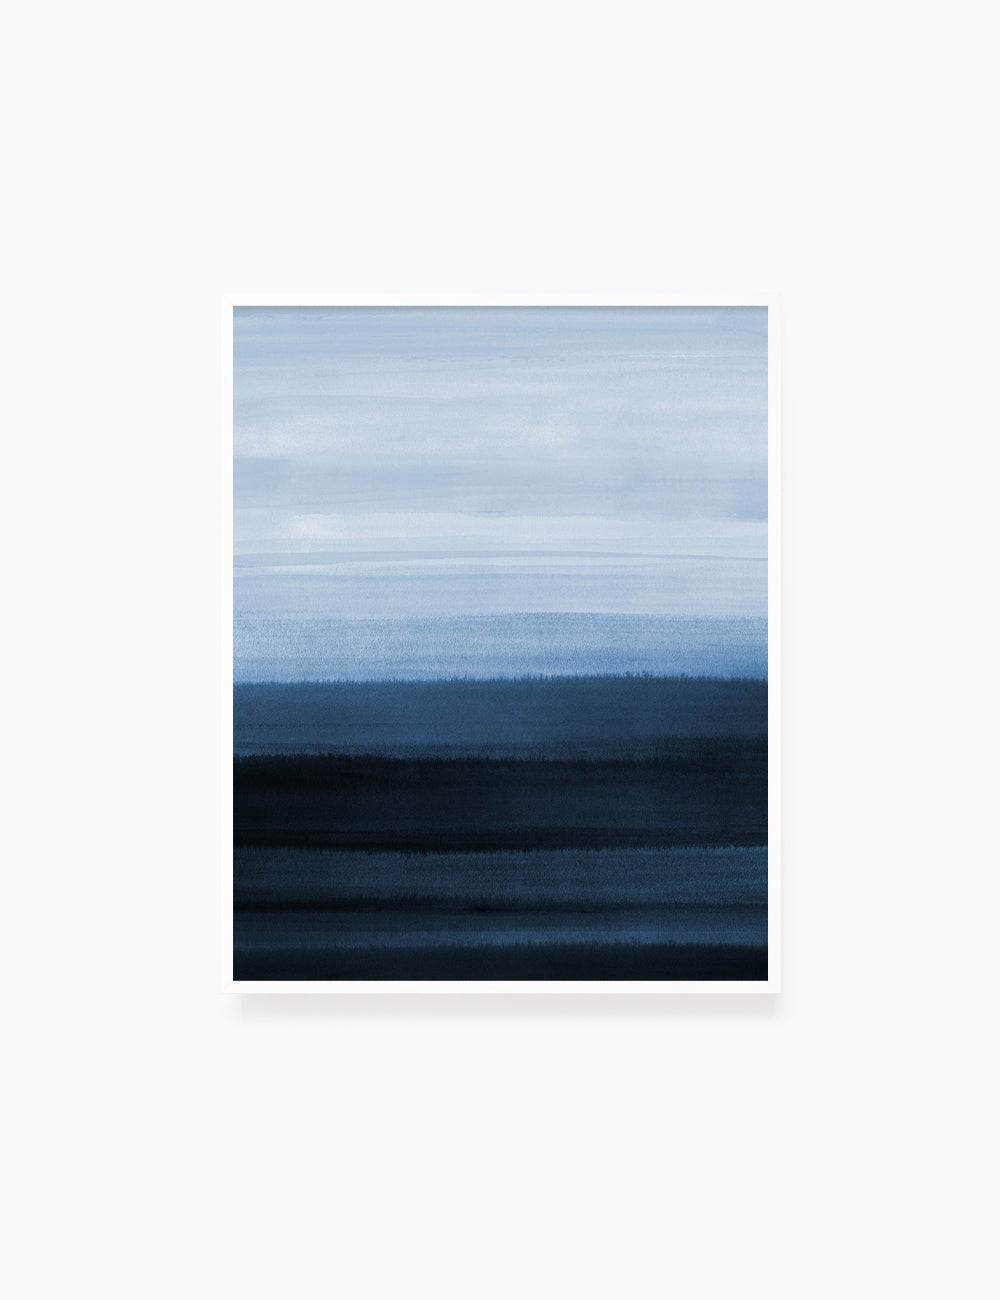 BLUE OCEAN LANDSCAPE. WATERCOLOR PAINTING. Abstract Art. Printable Wall Art Illustration. - PAPER MOON Art & Design